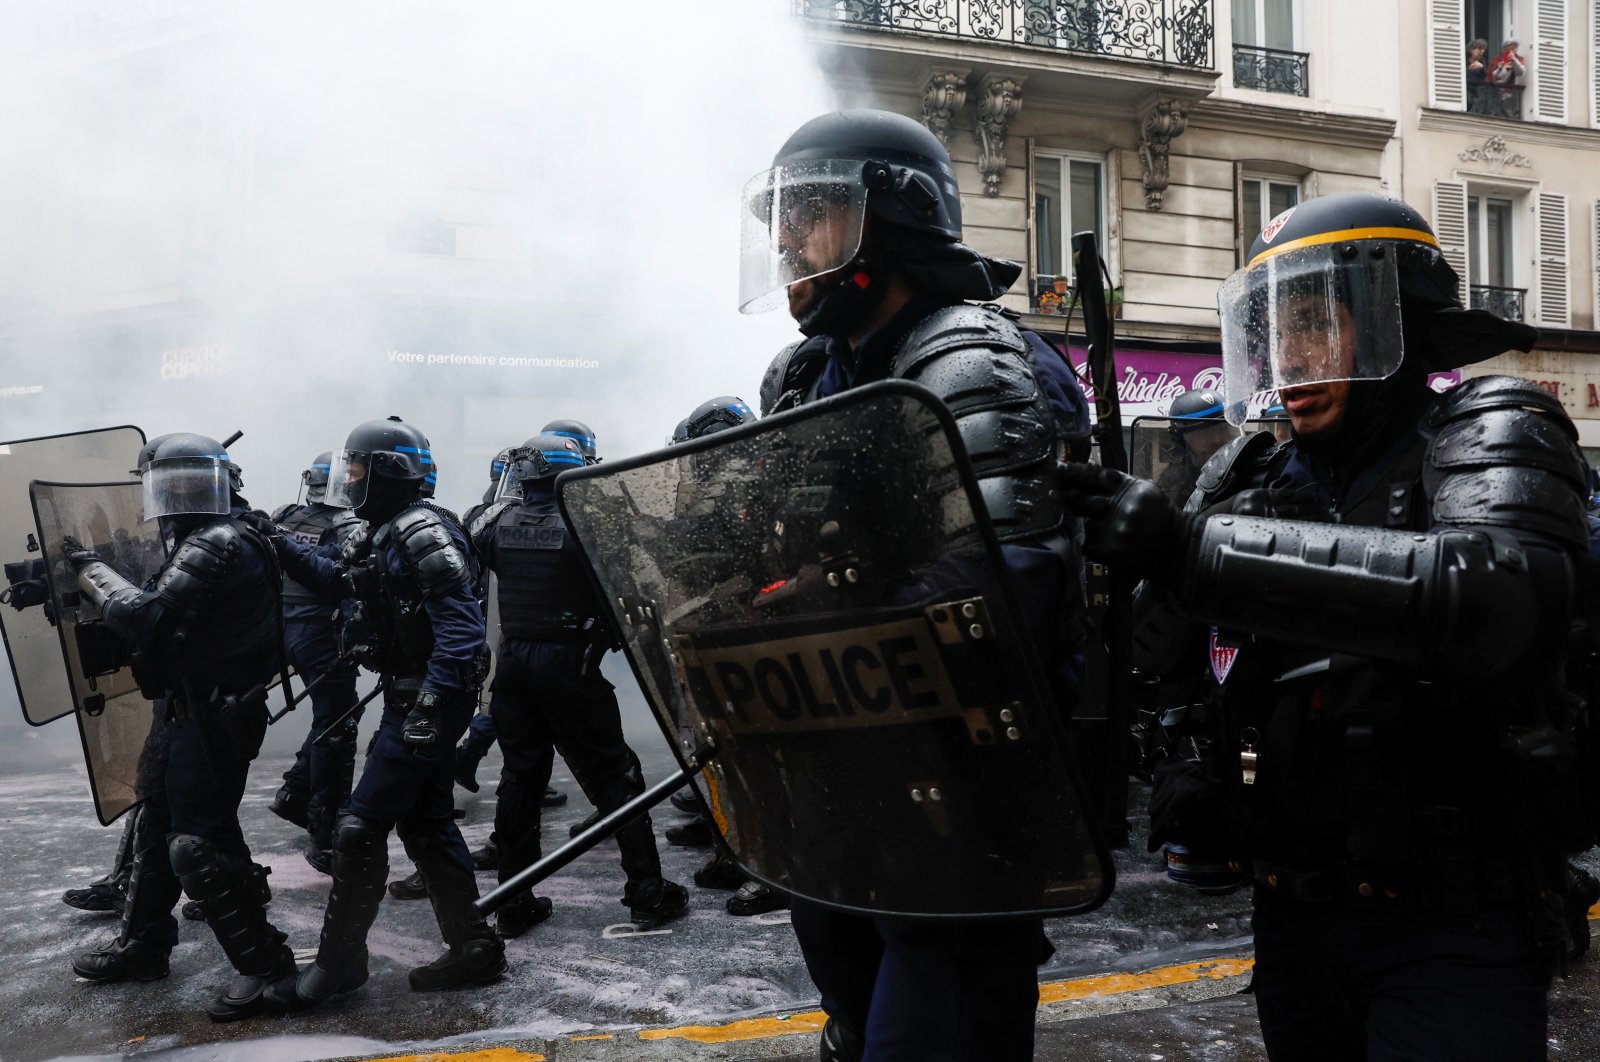 Prancis mengecam PBB atas rasisme, kekerasan polisi